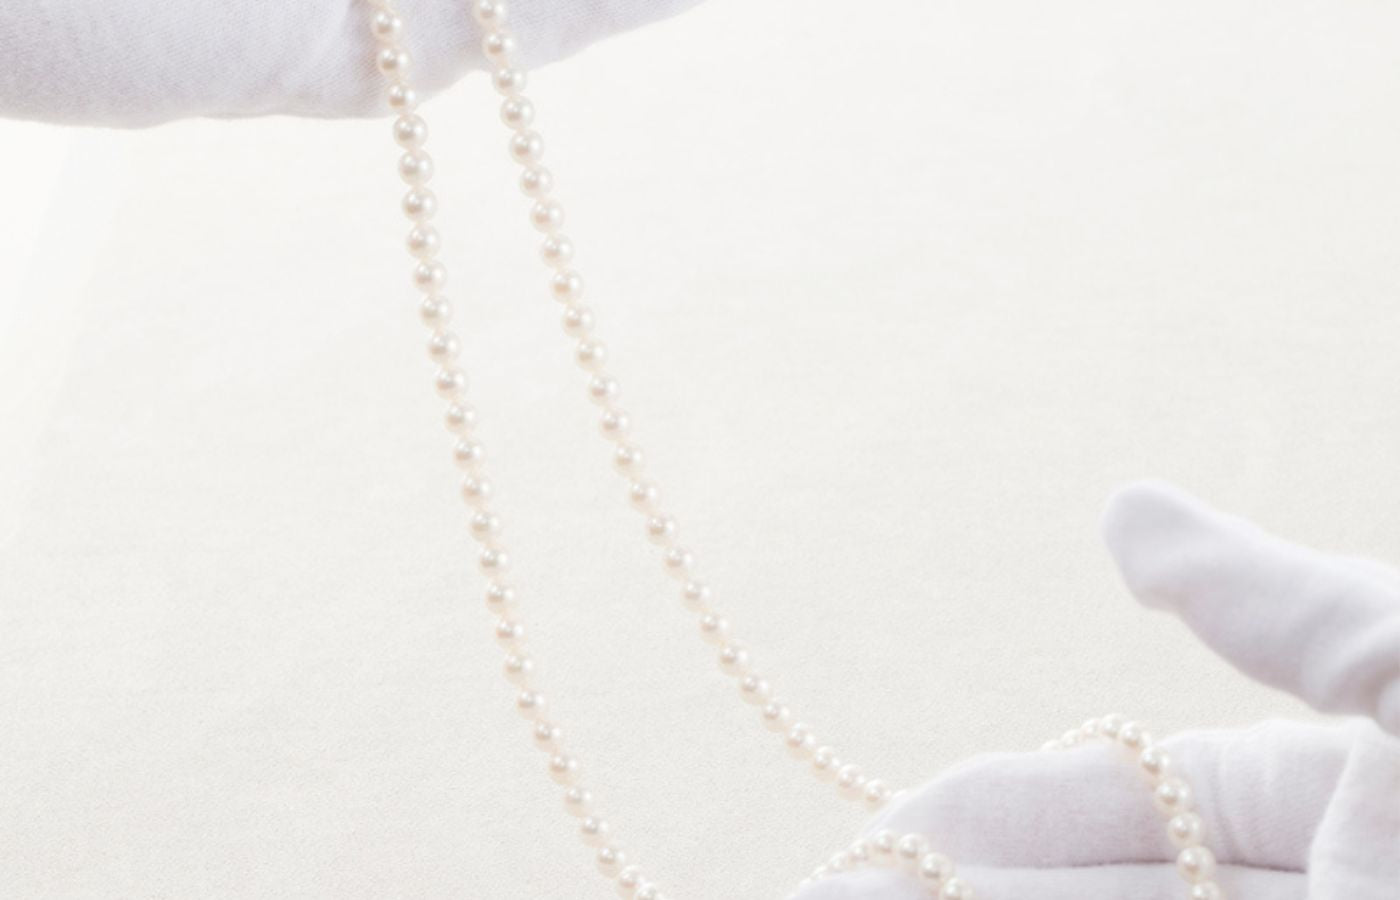 Jewellery Care – Pearls